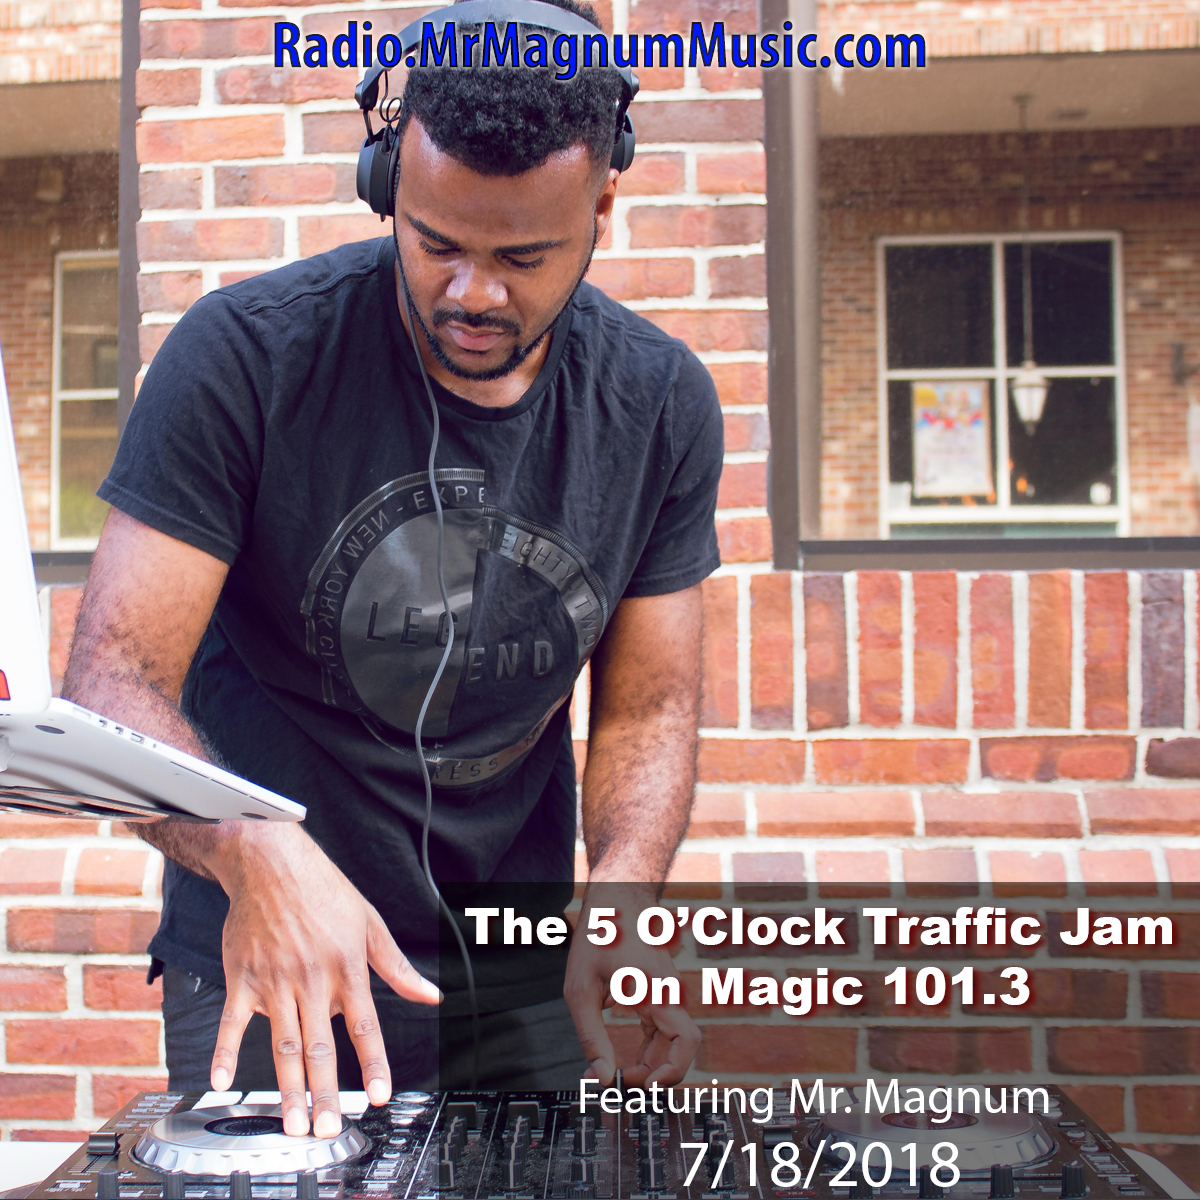 The 5 O'Clock Traffic Jam 20180718 featuring Gainesville's #1 DJ, Mr. Magnum on Magic 101.3